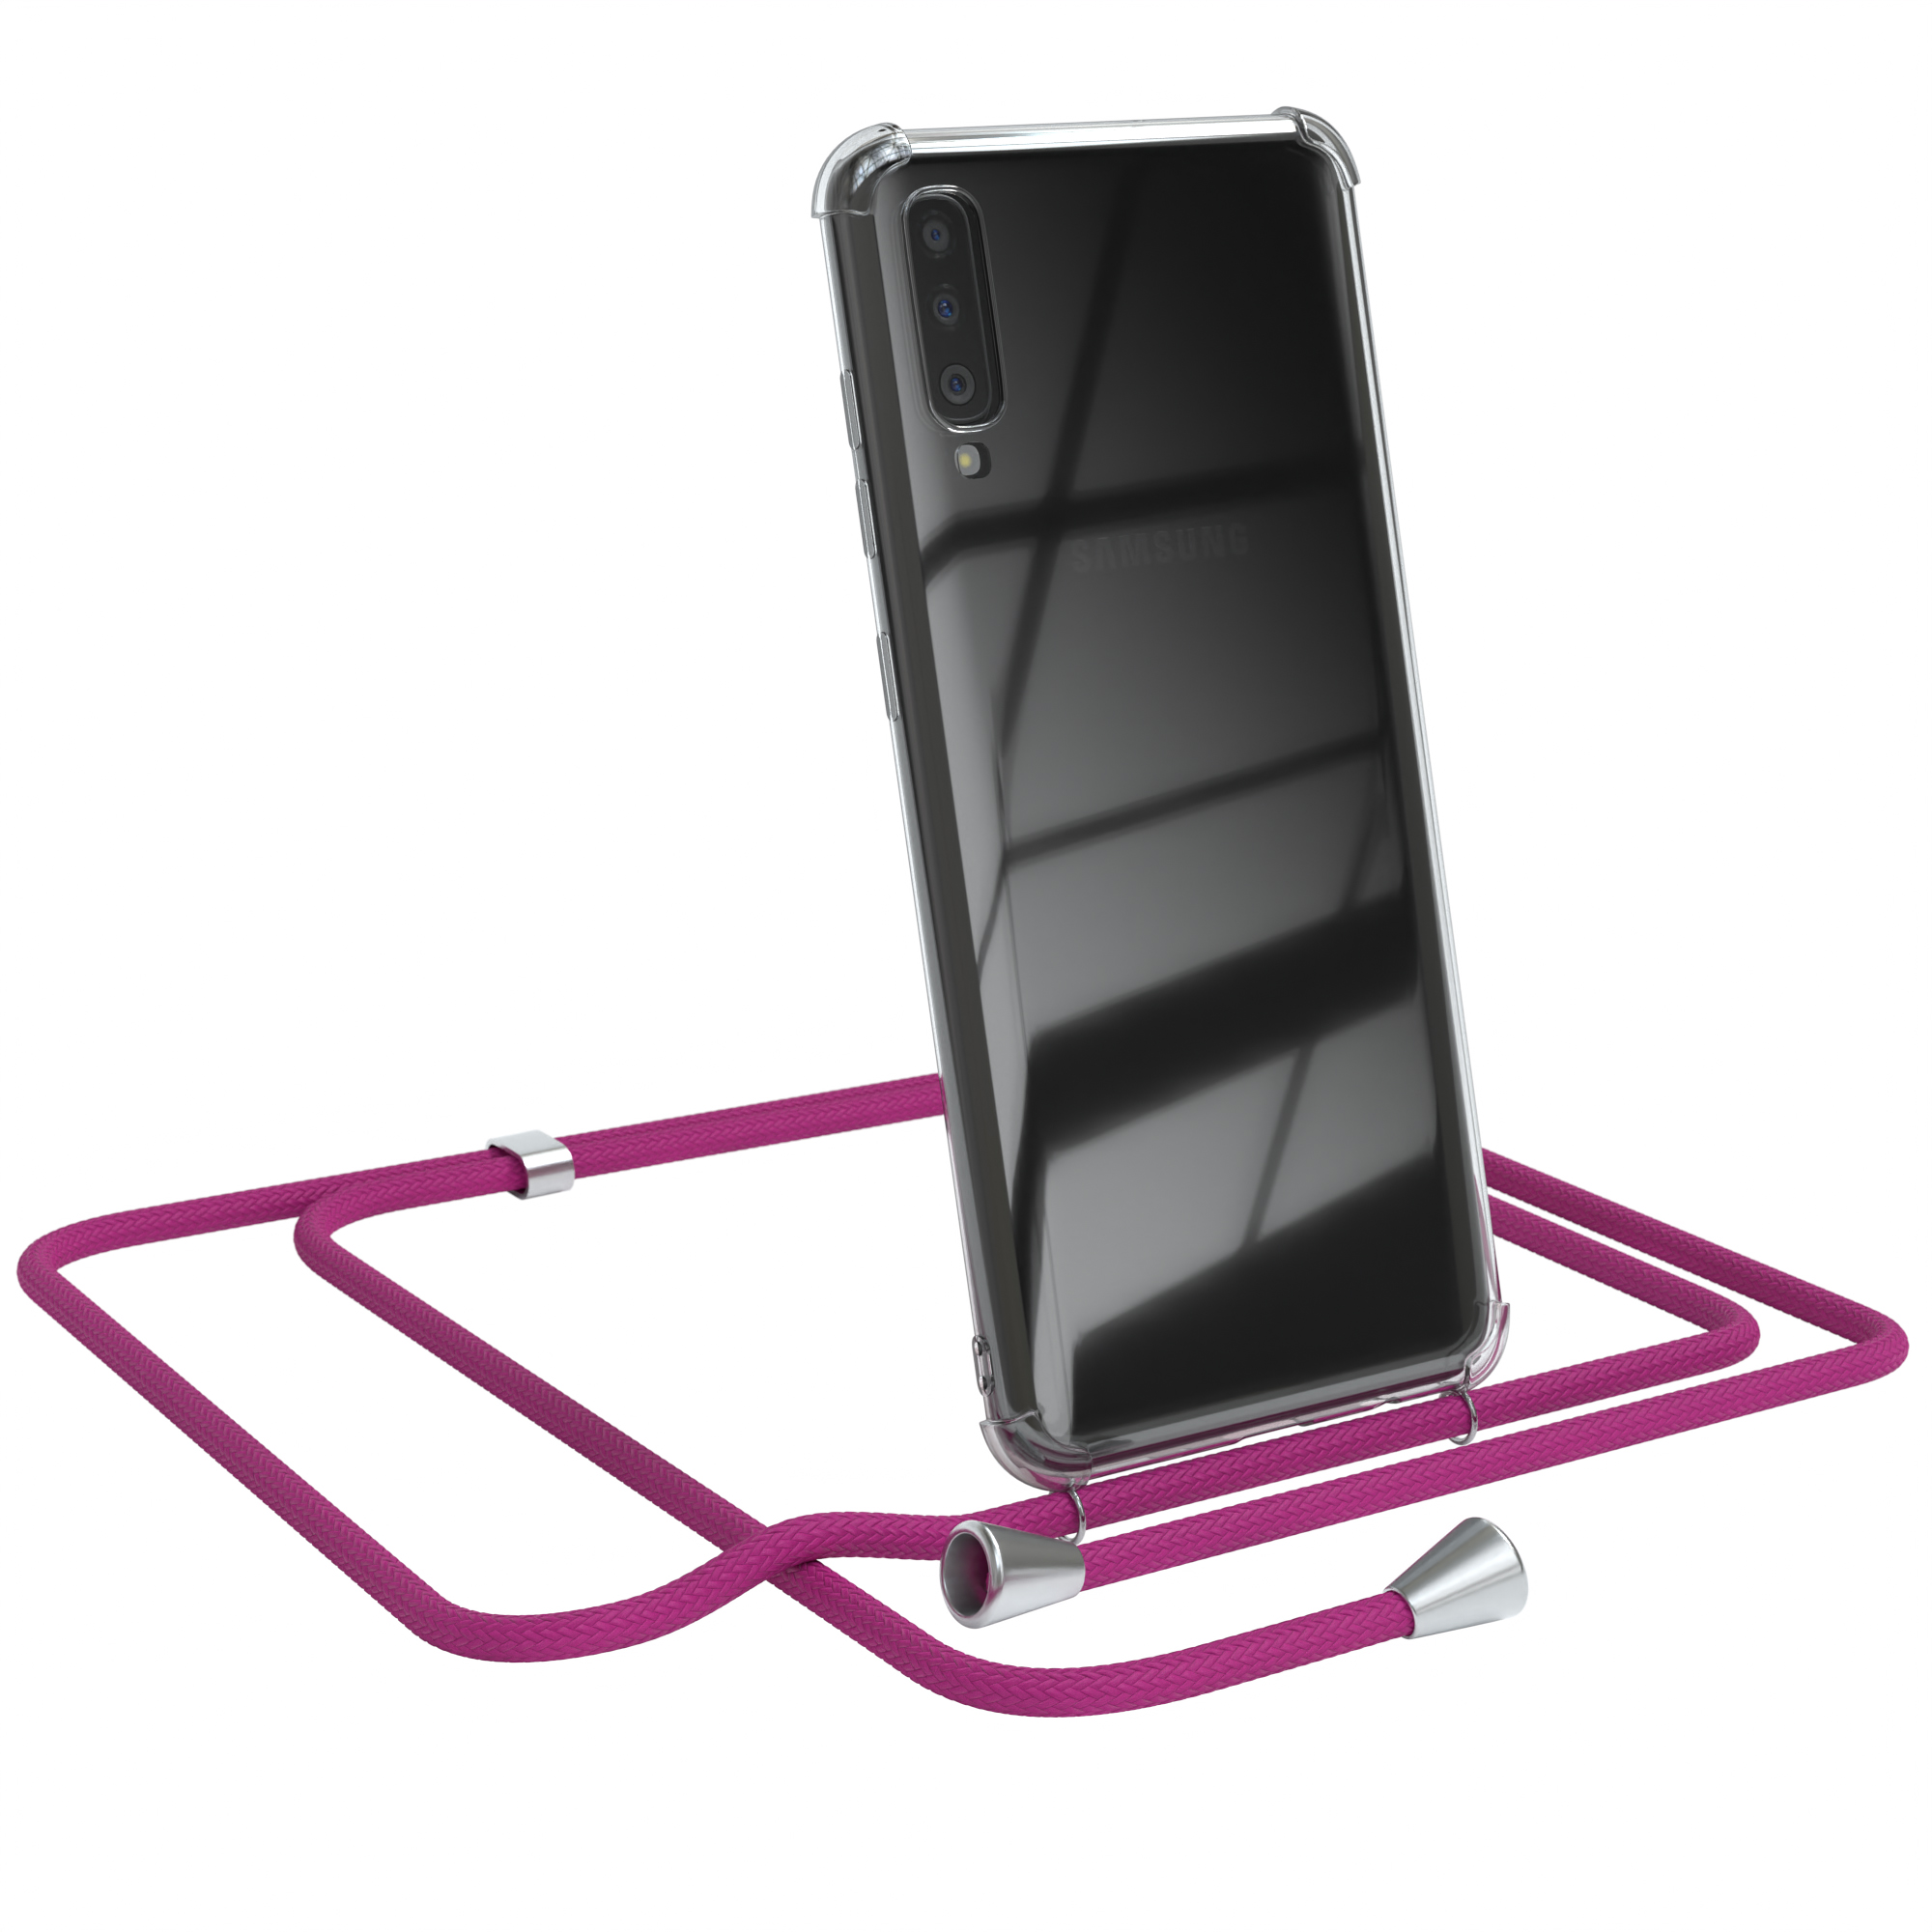 EAZY / CASE Samsung, Clear Umhängetasche, Pink Umhängeband, Galaxy mit Cover A70, Silber Clips